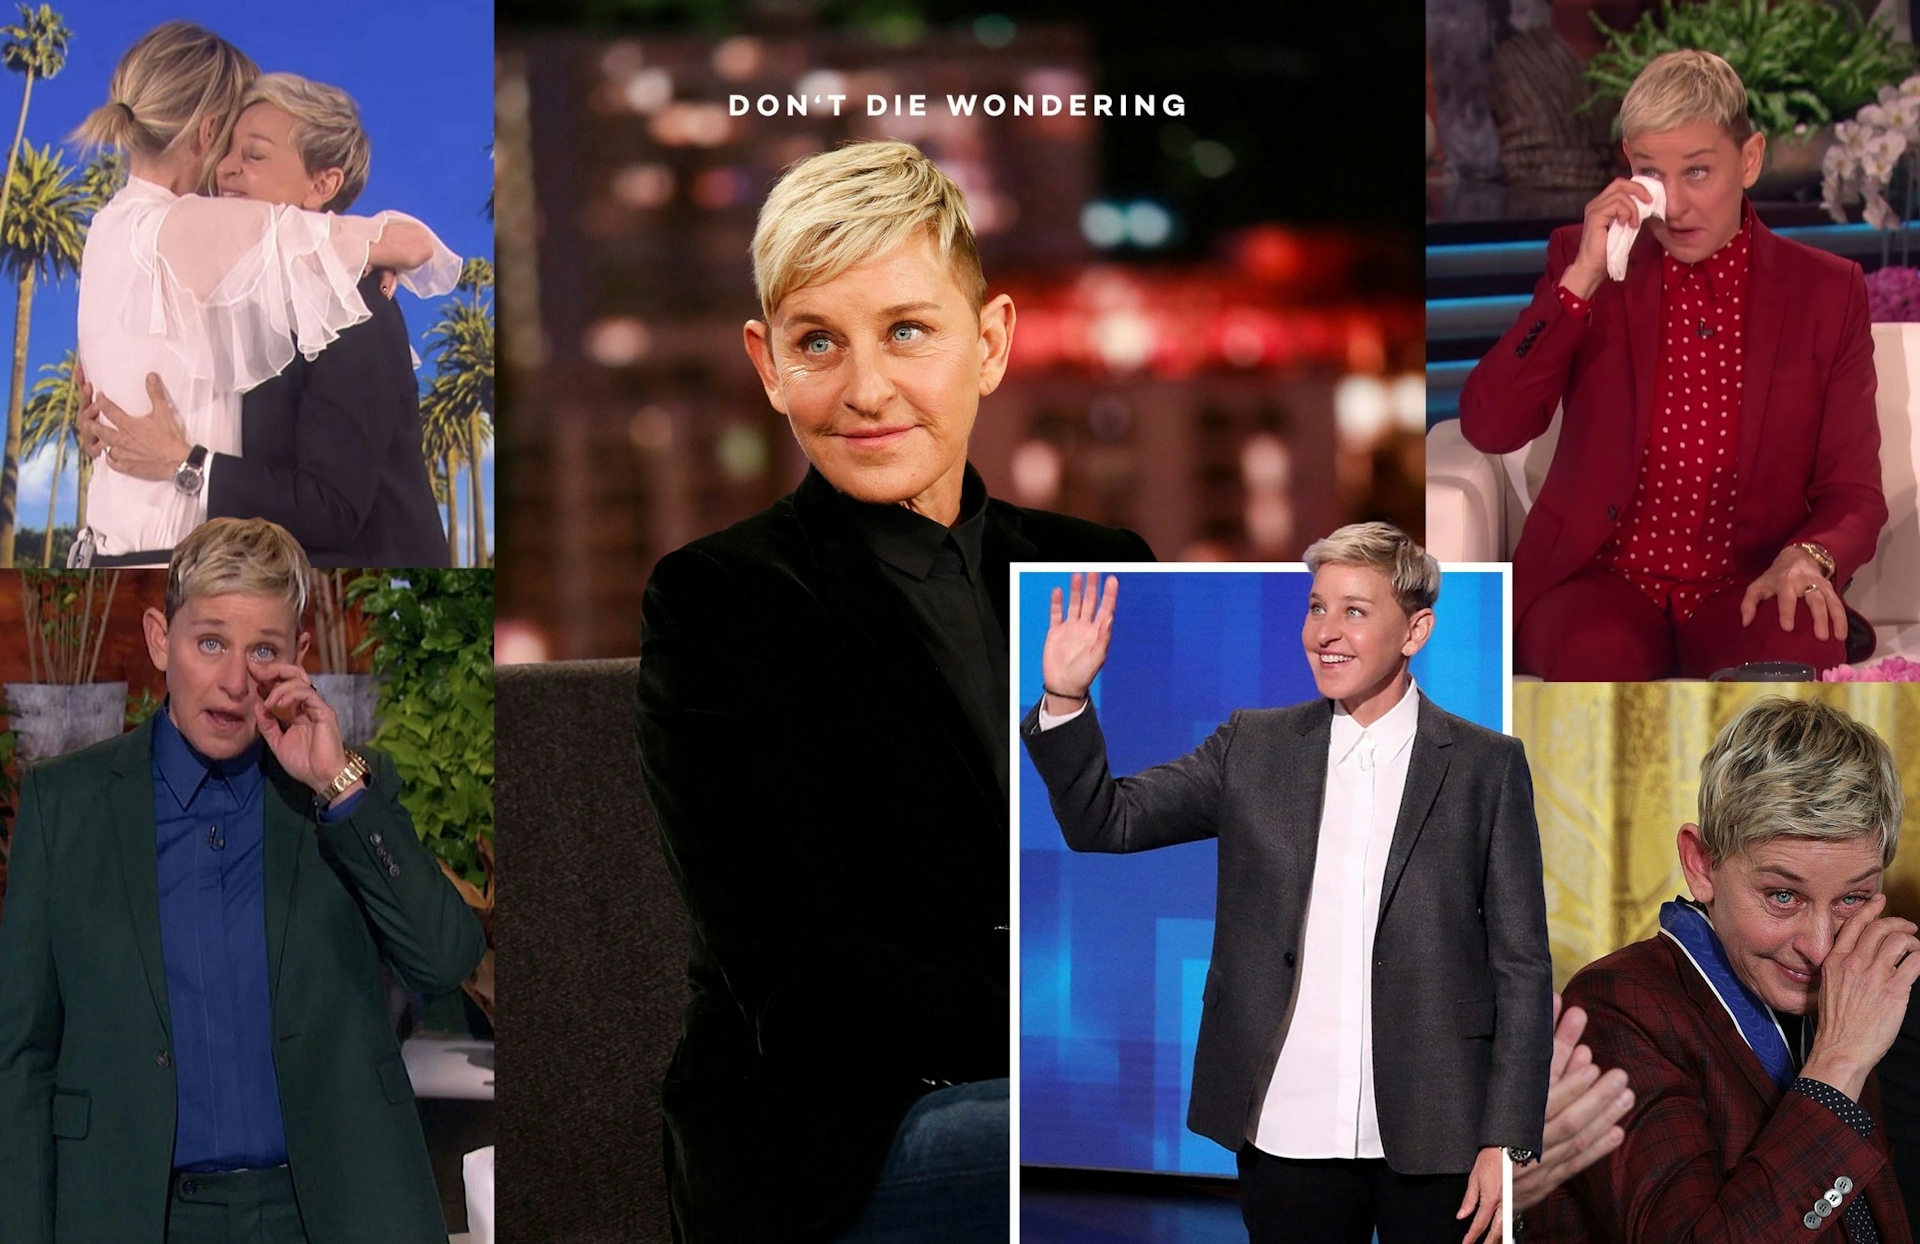 An emotional goodbye from Ellen DeGeneres after filming the last episode of her talk show